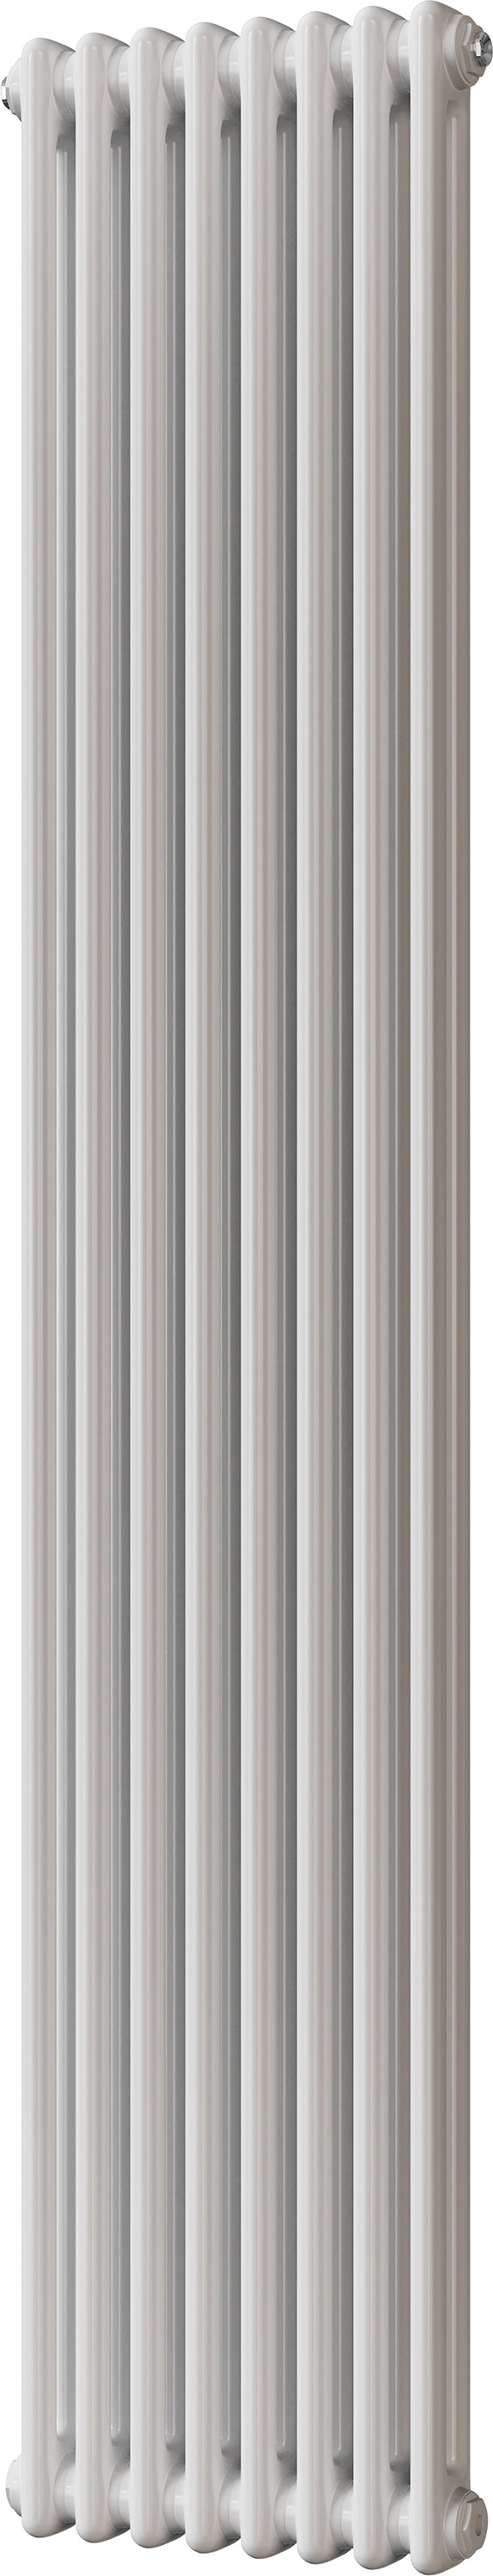 Alpha - White Vertical Column Radiator H1800mm x W372mm 2 Column